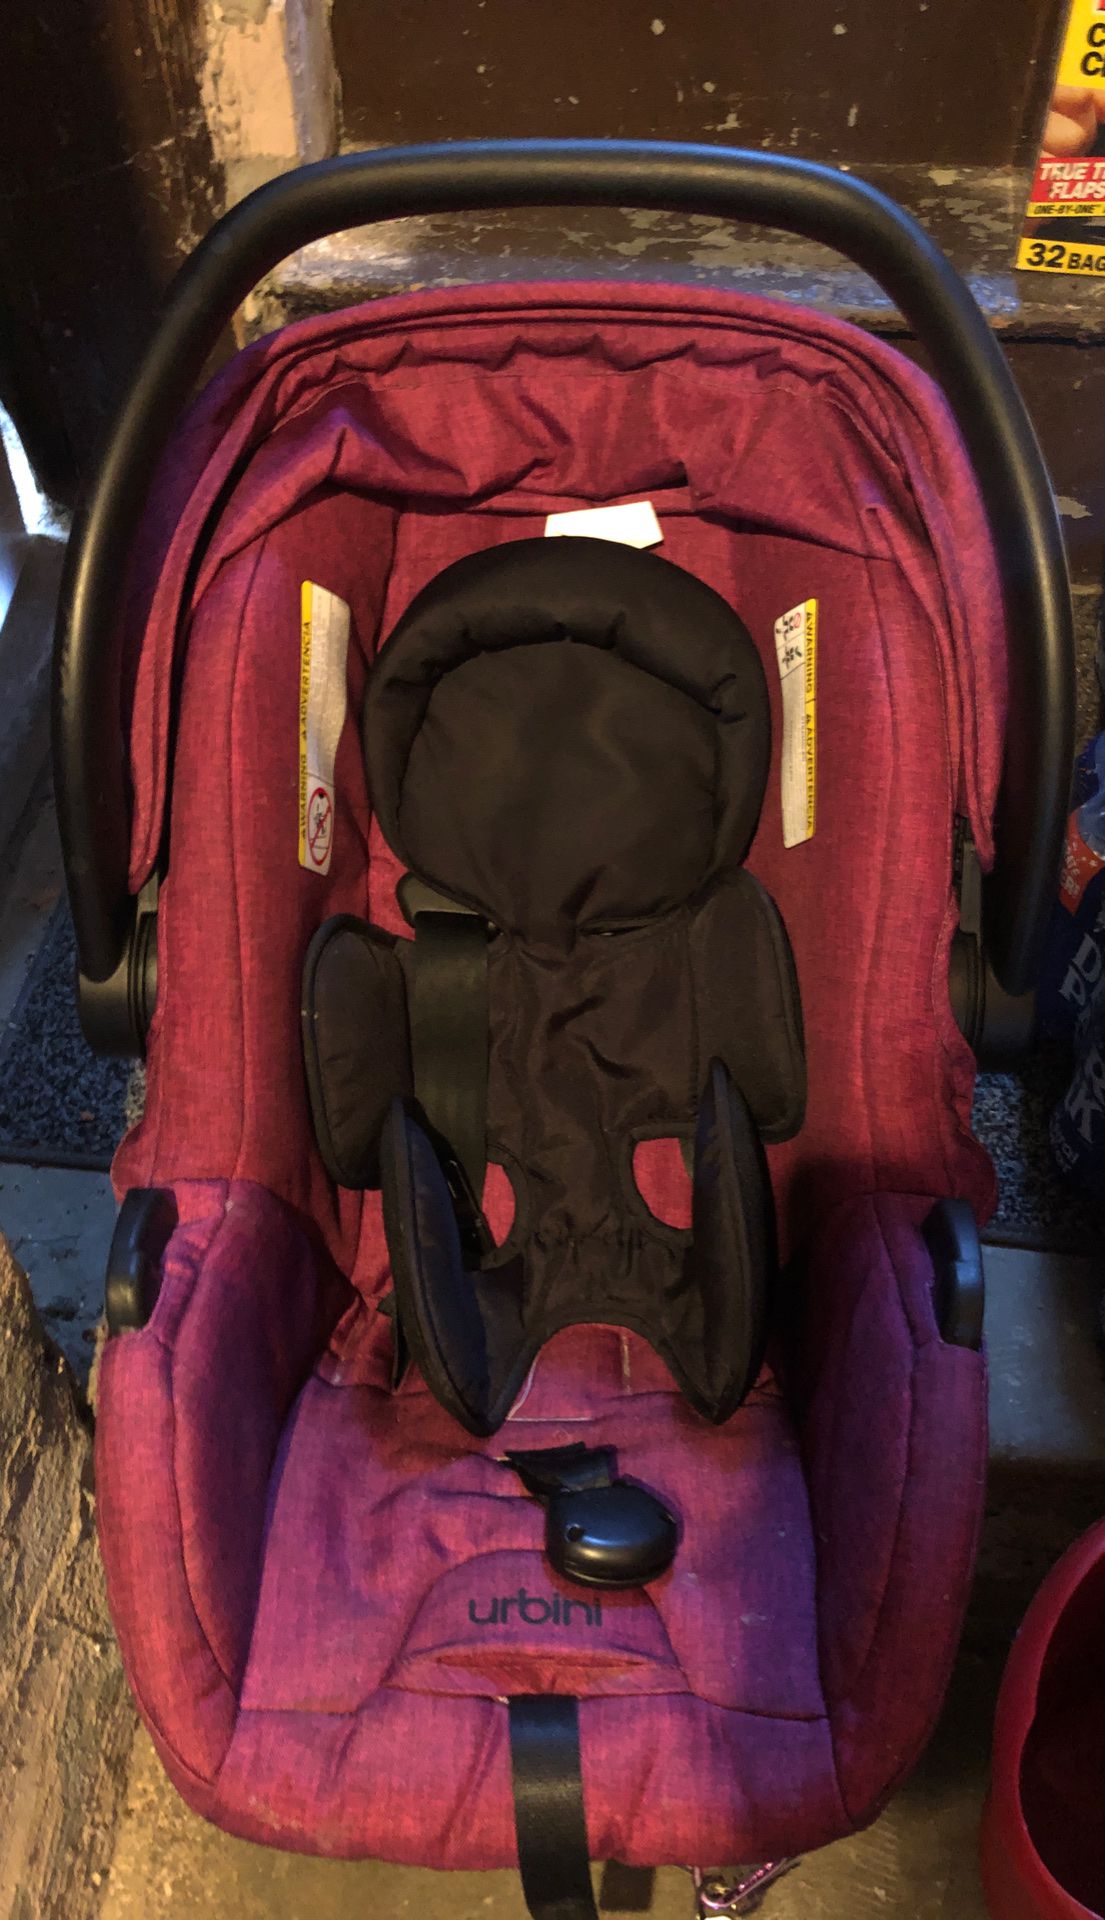 Urbani infant car seat